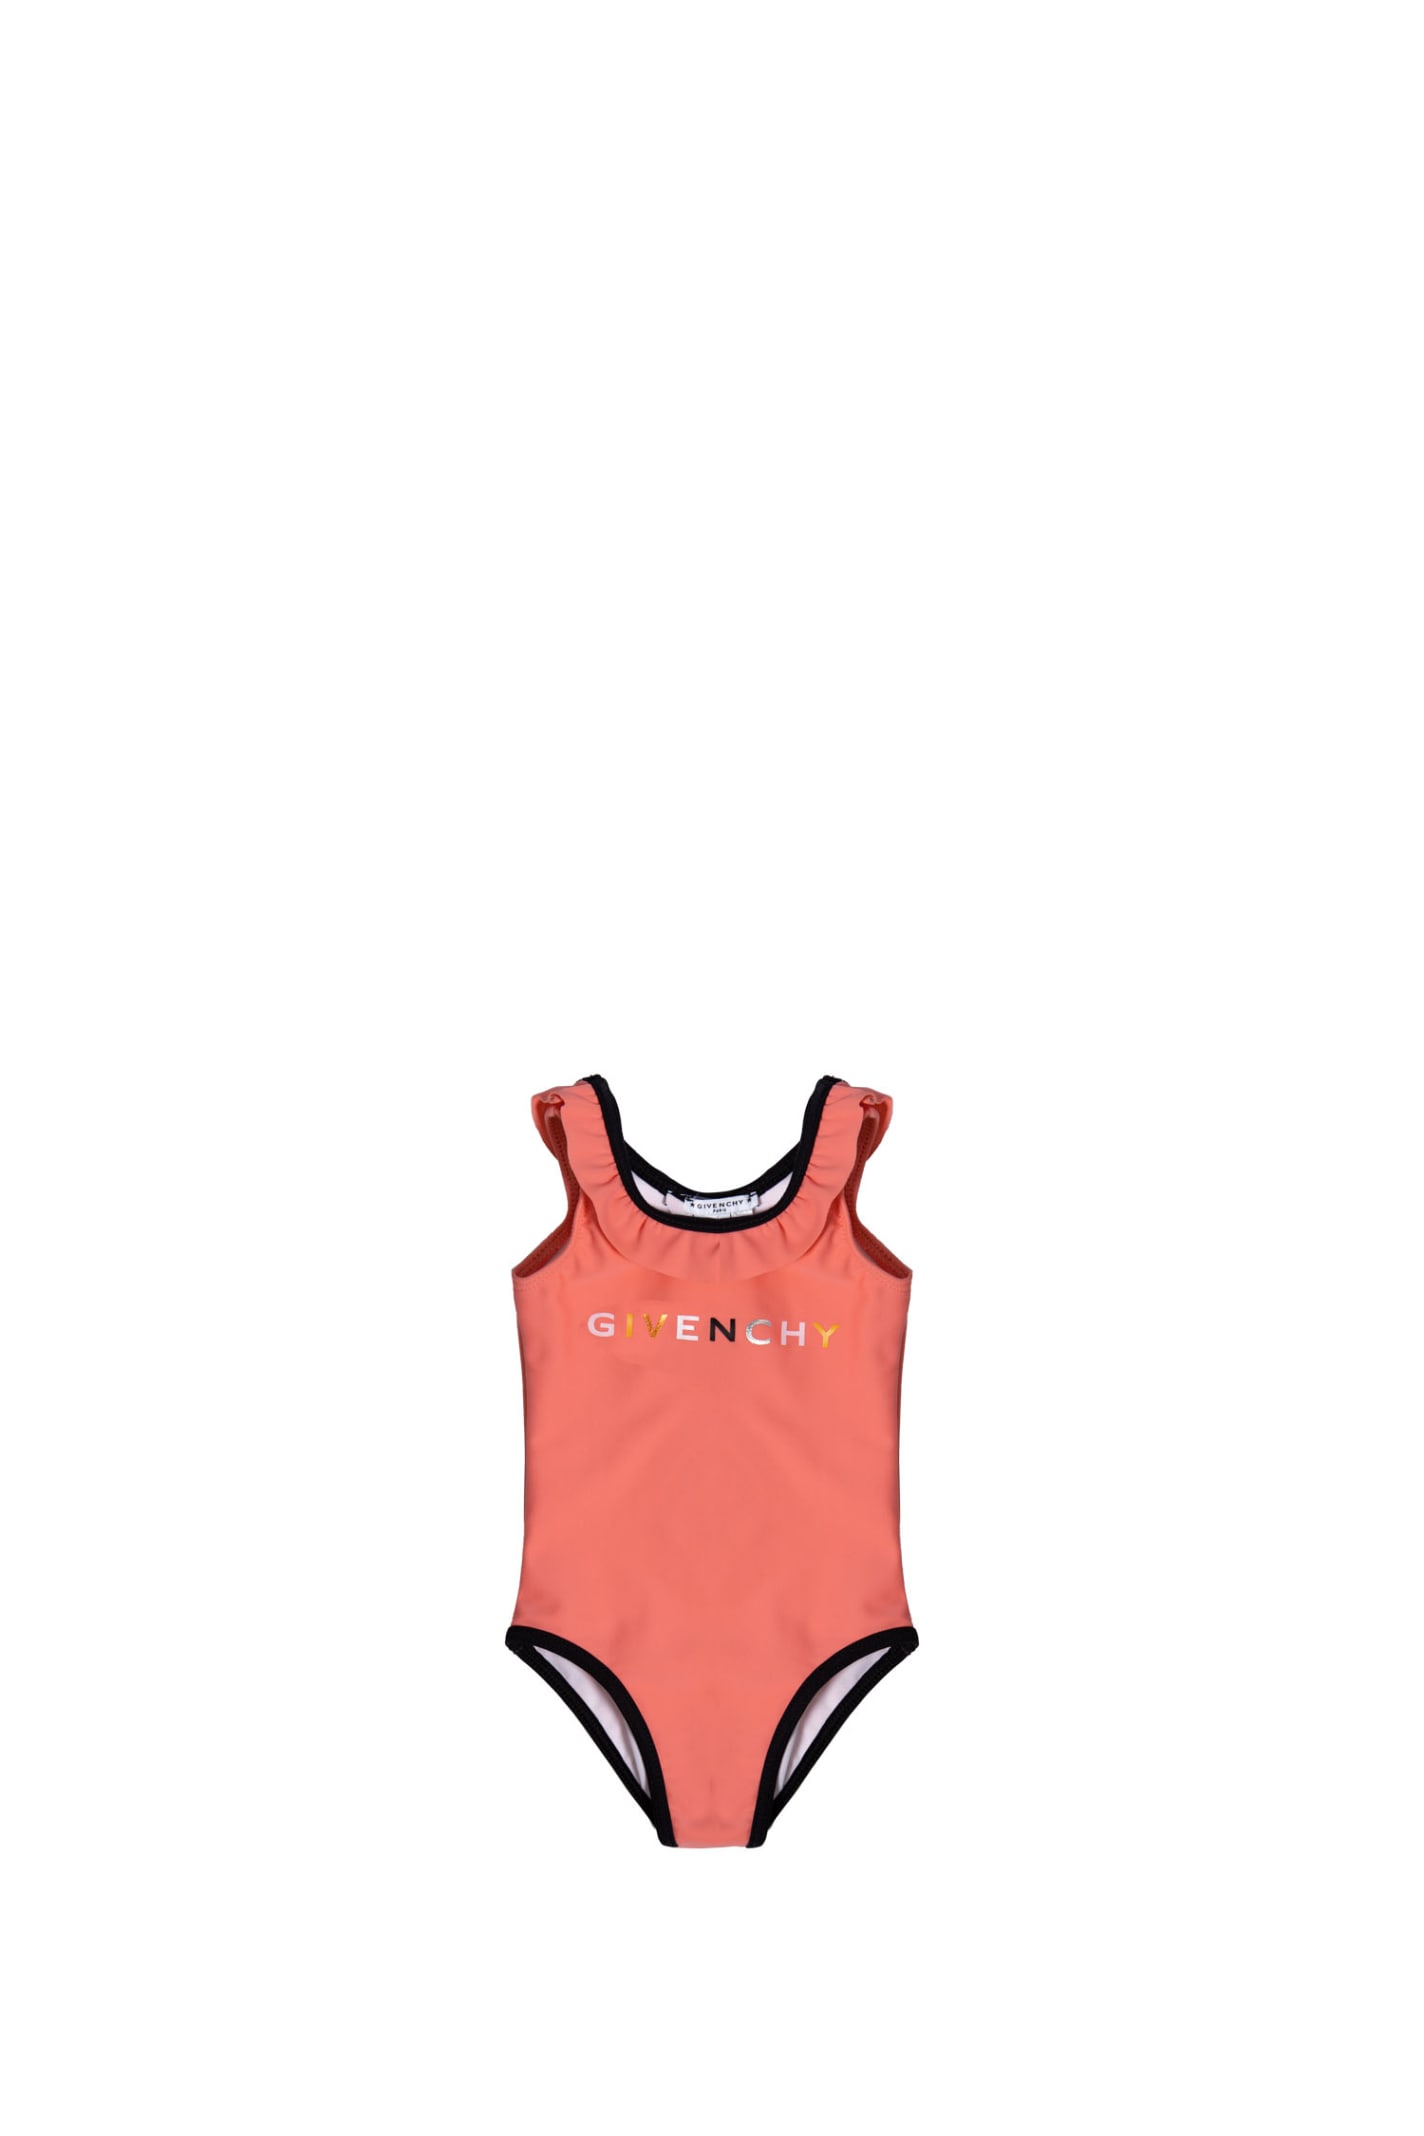 Givenchy Babies' Swimwear